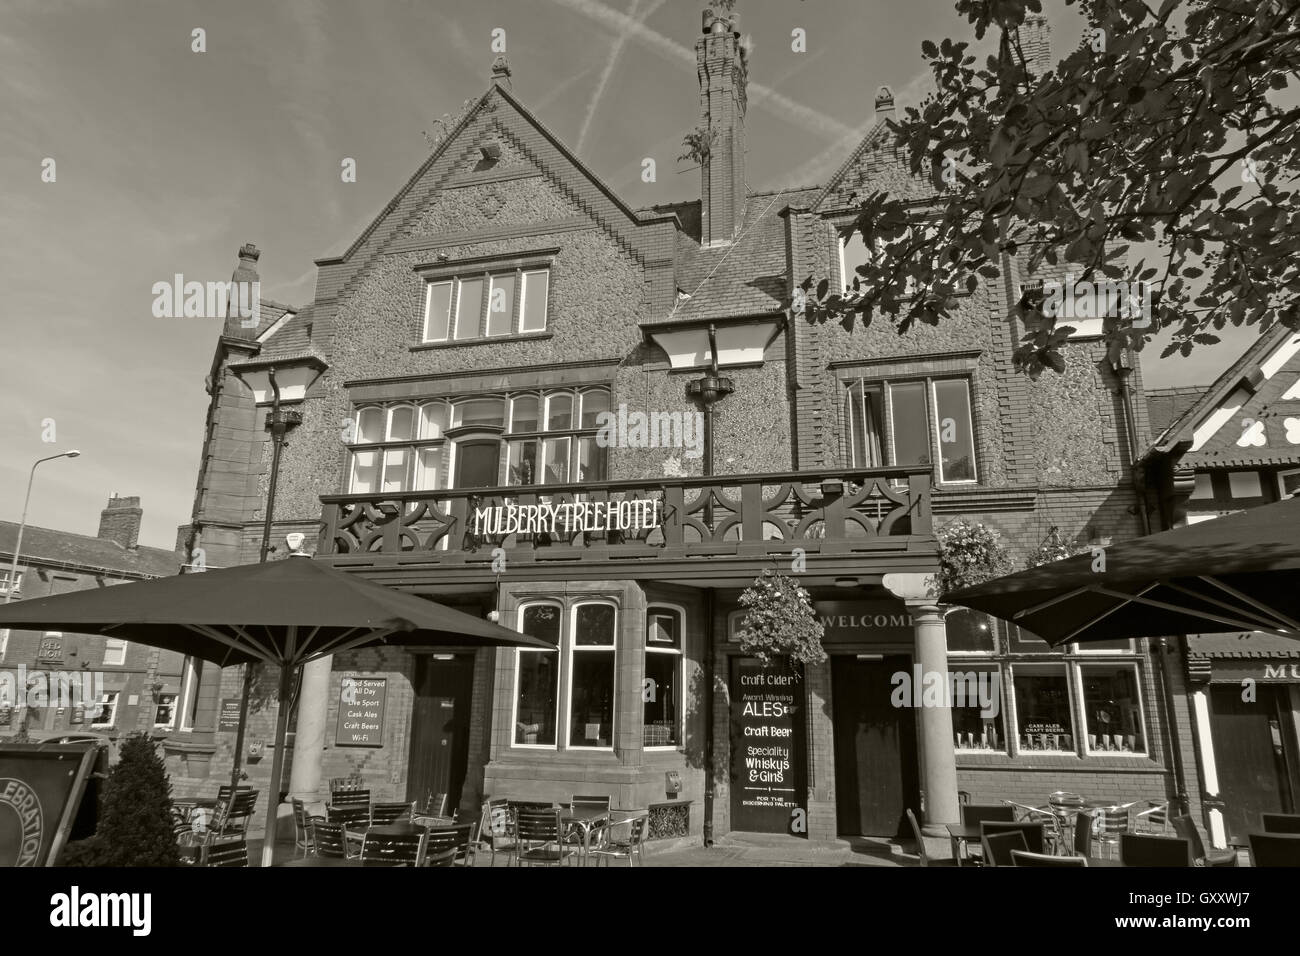 Mulberry Tree Pub, Stockton Heath, Süd Warrington, Cheshire, England, UK s/w Stockfoto